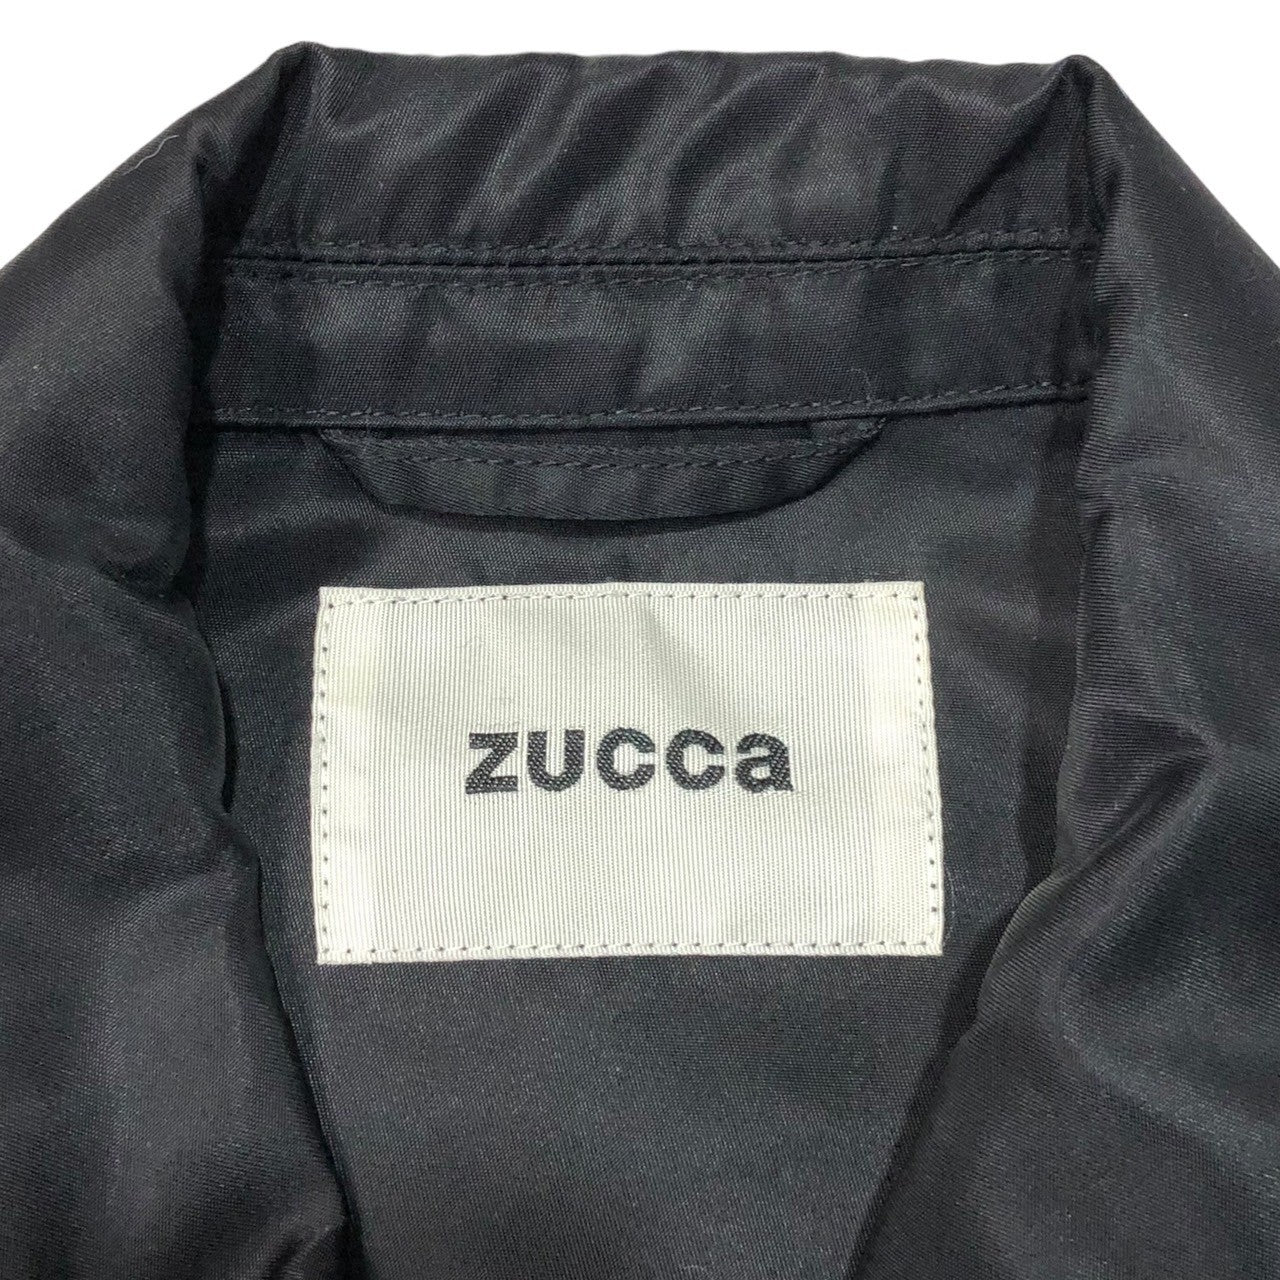 zucca(ズッカ) 19AW logo coach jacket アーム ロゴ プリント ナイロン コーチ ジャケット ZU93FC075 M  ブラック